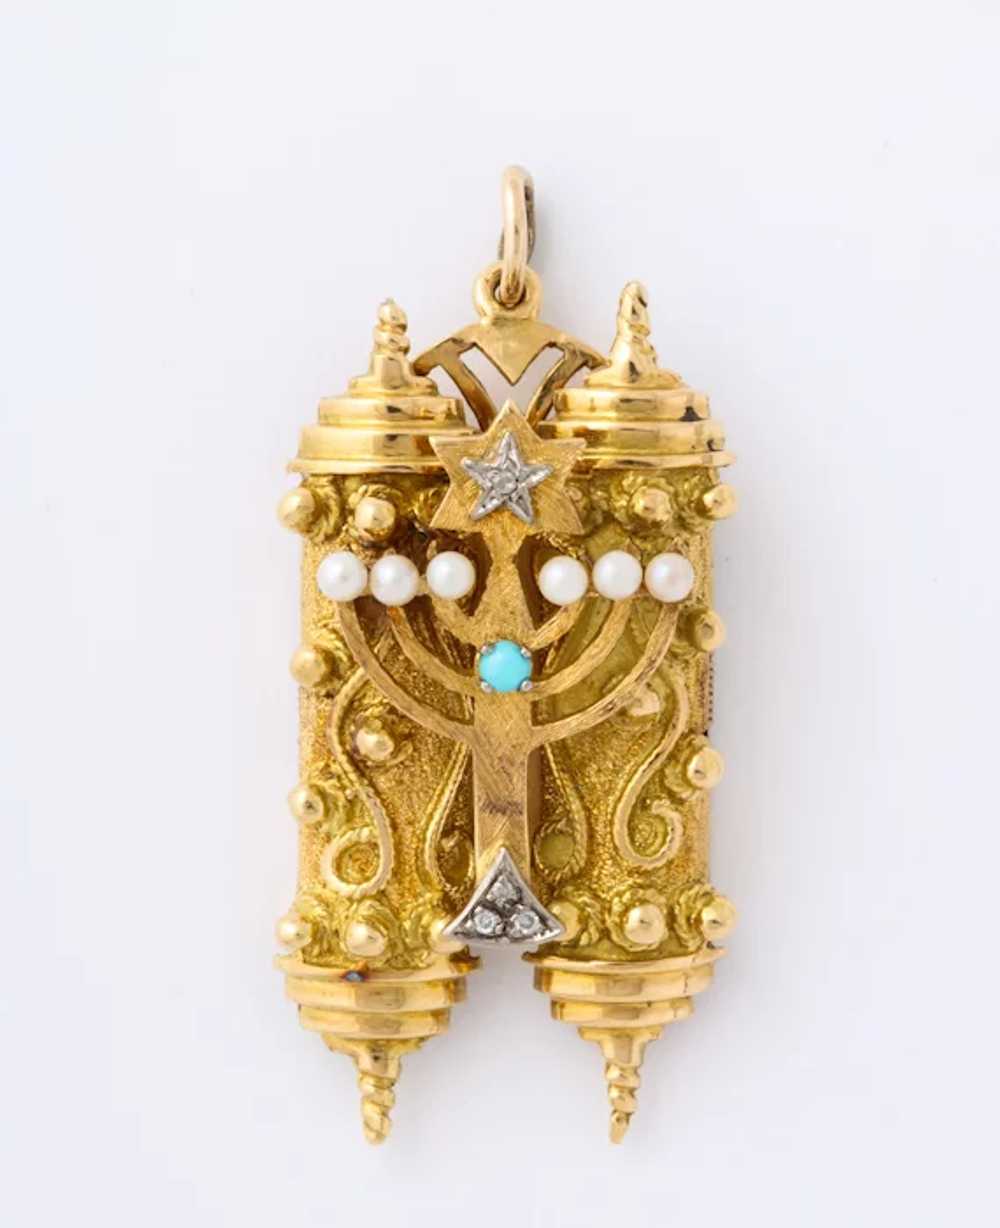 18kt. Gold Handmade Torah Pendant or Charm - image 5